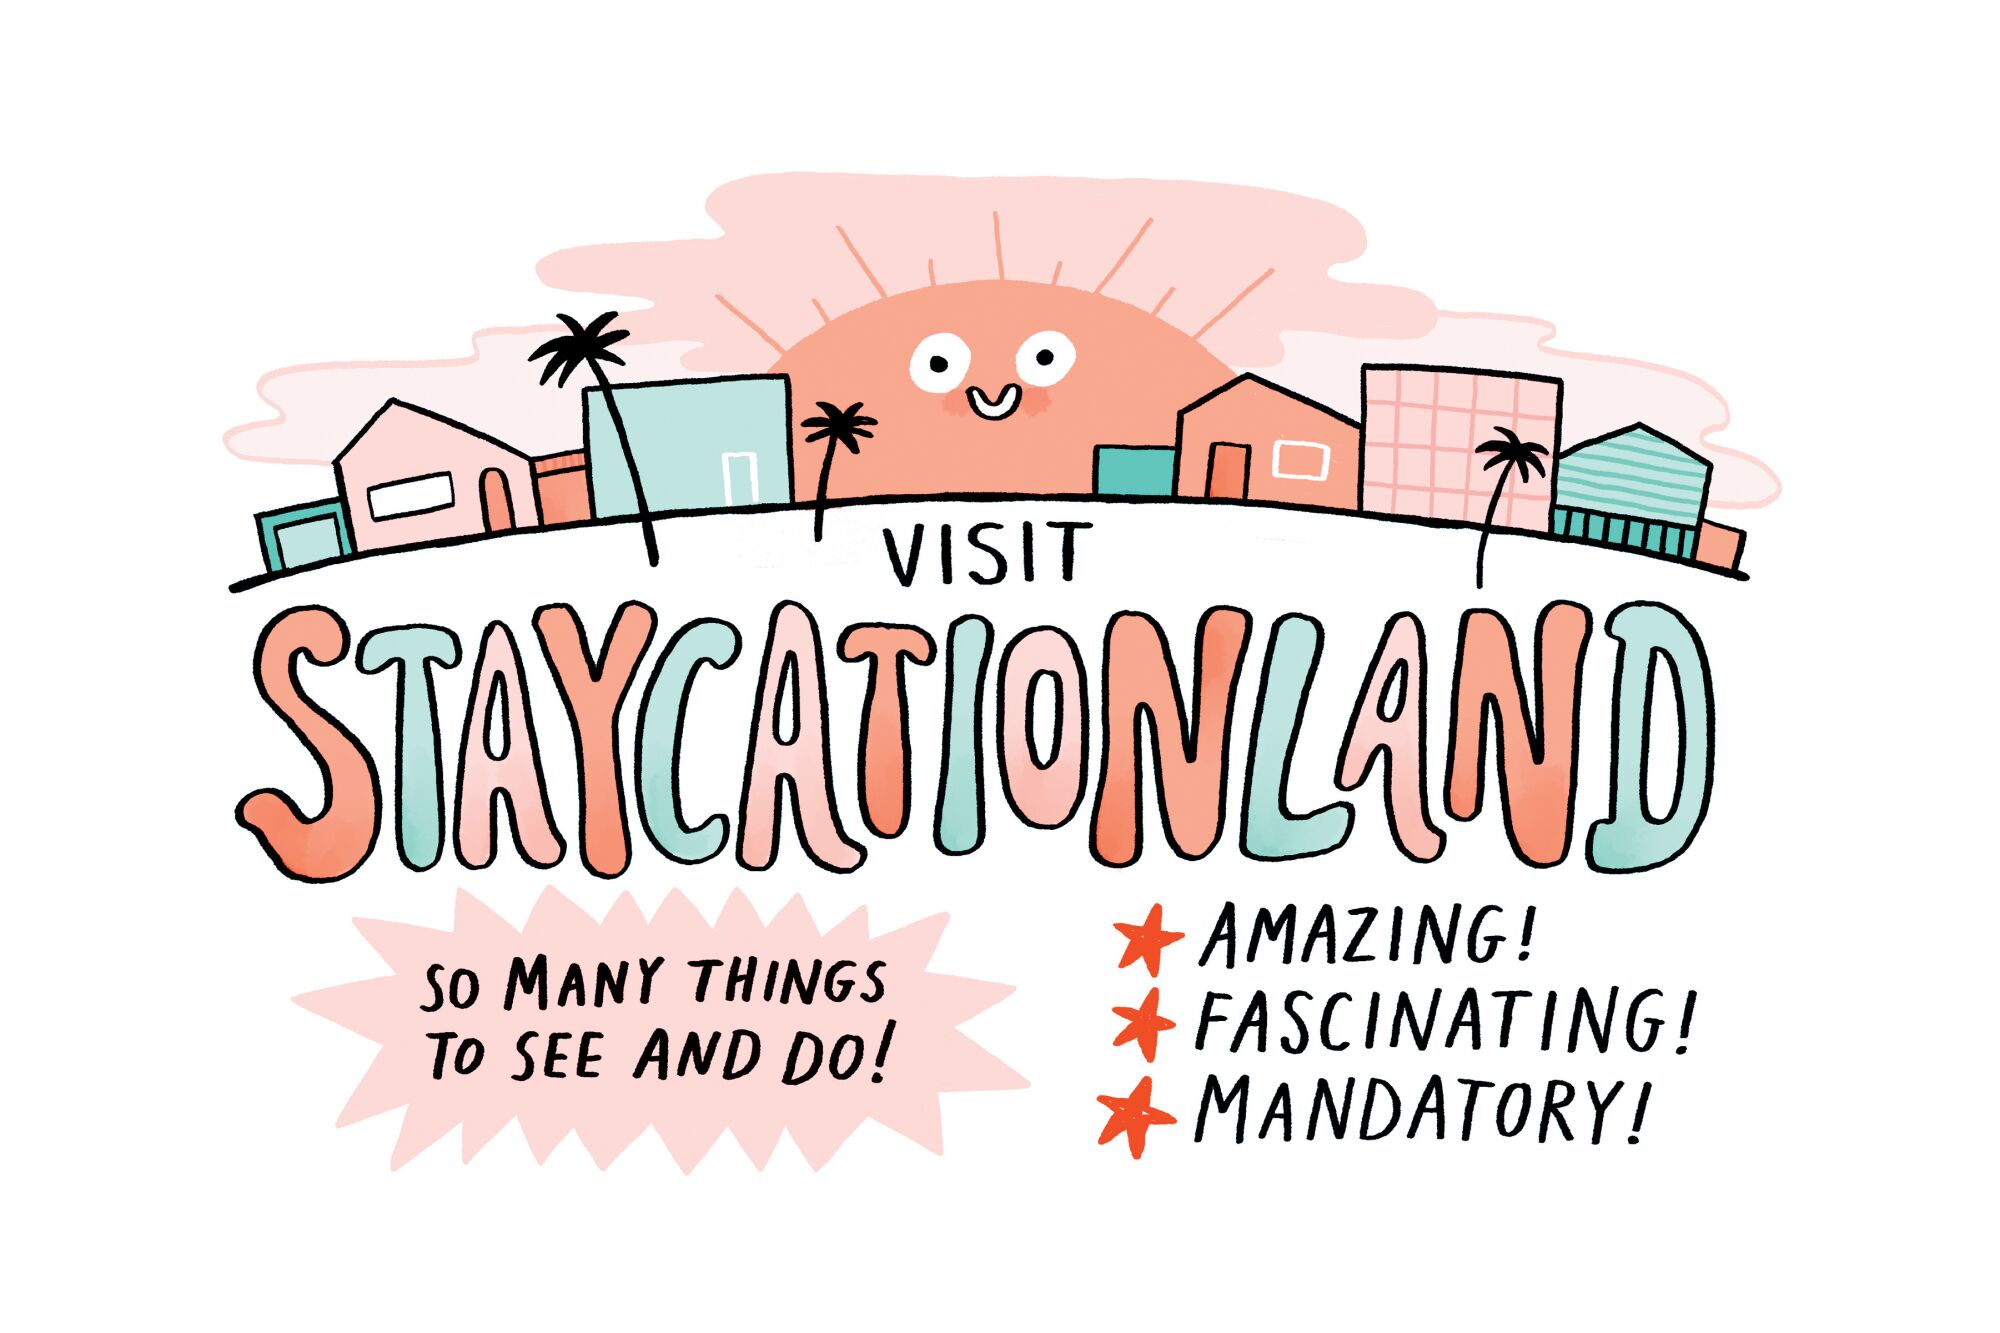 Visit Staycationland